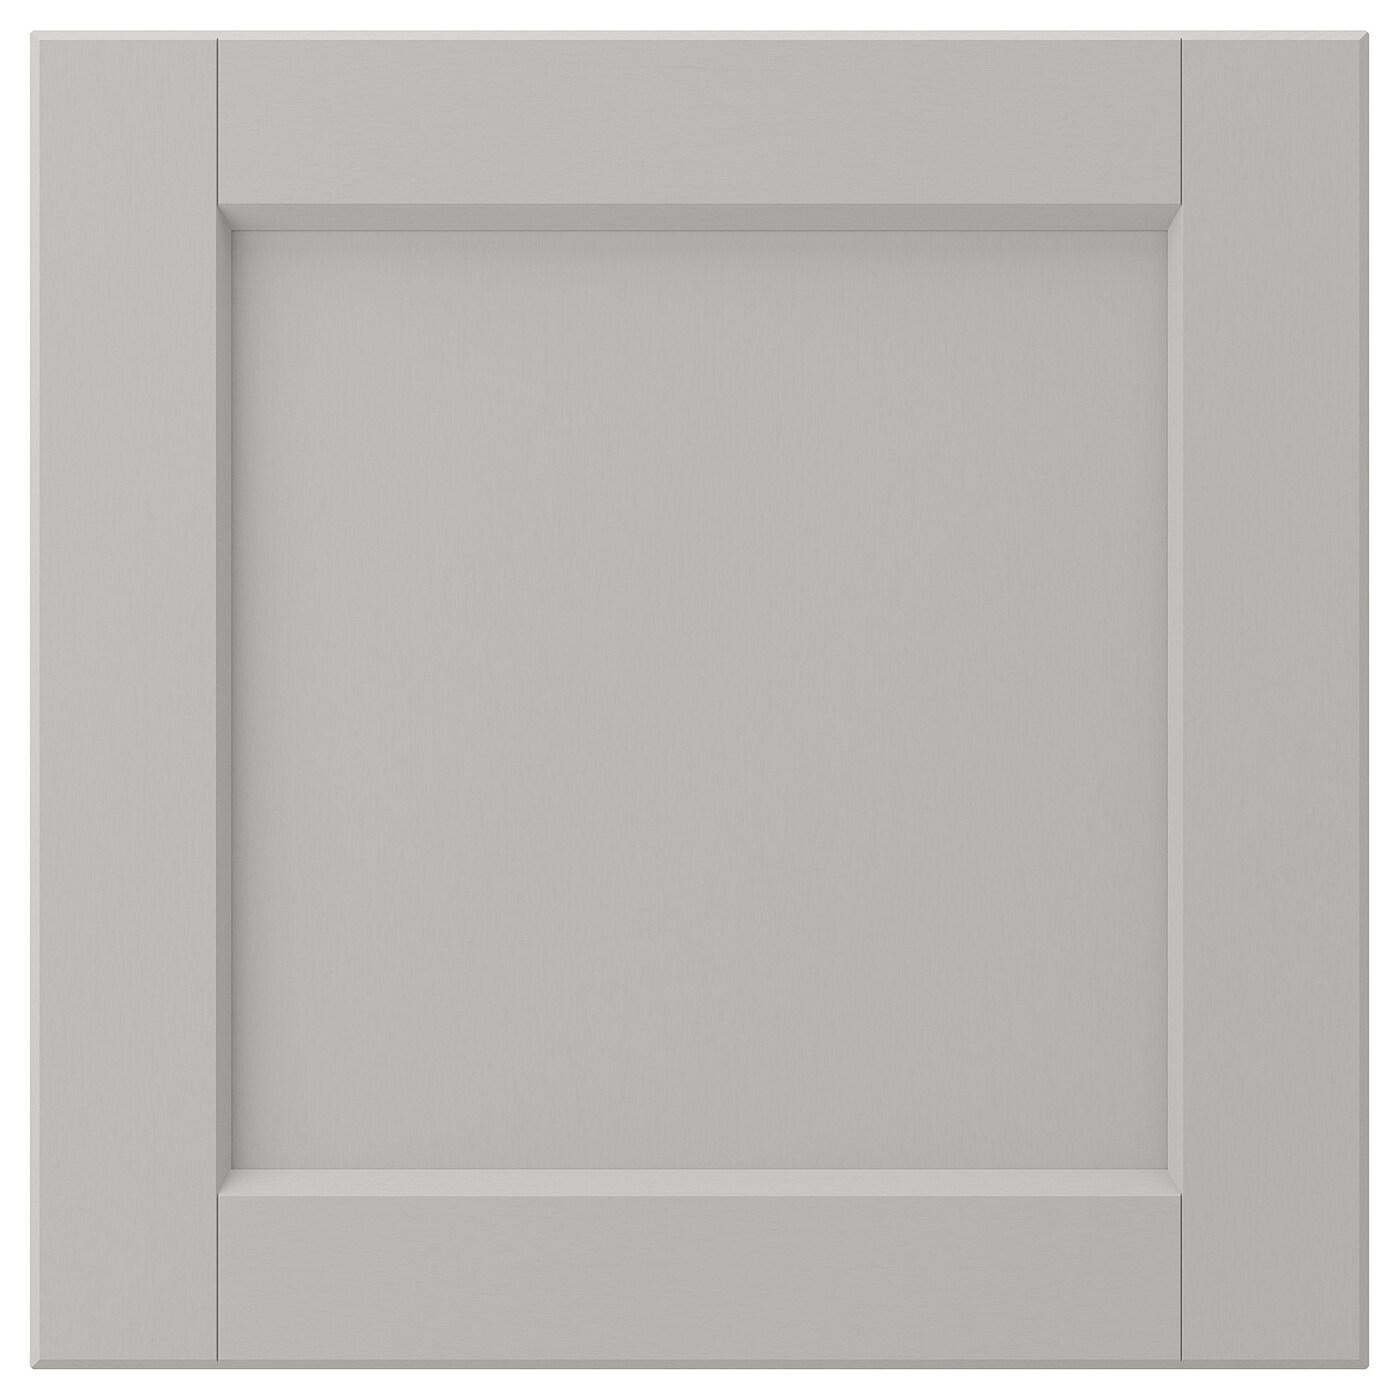 Фасад ящика - IKEA LERHYTTAN, 40х40 см, светло-серый, ЛЕРХЮТТАН ИКЕА